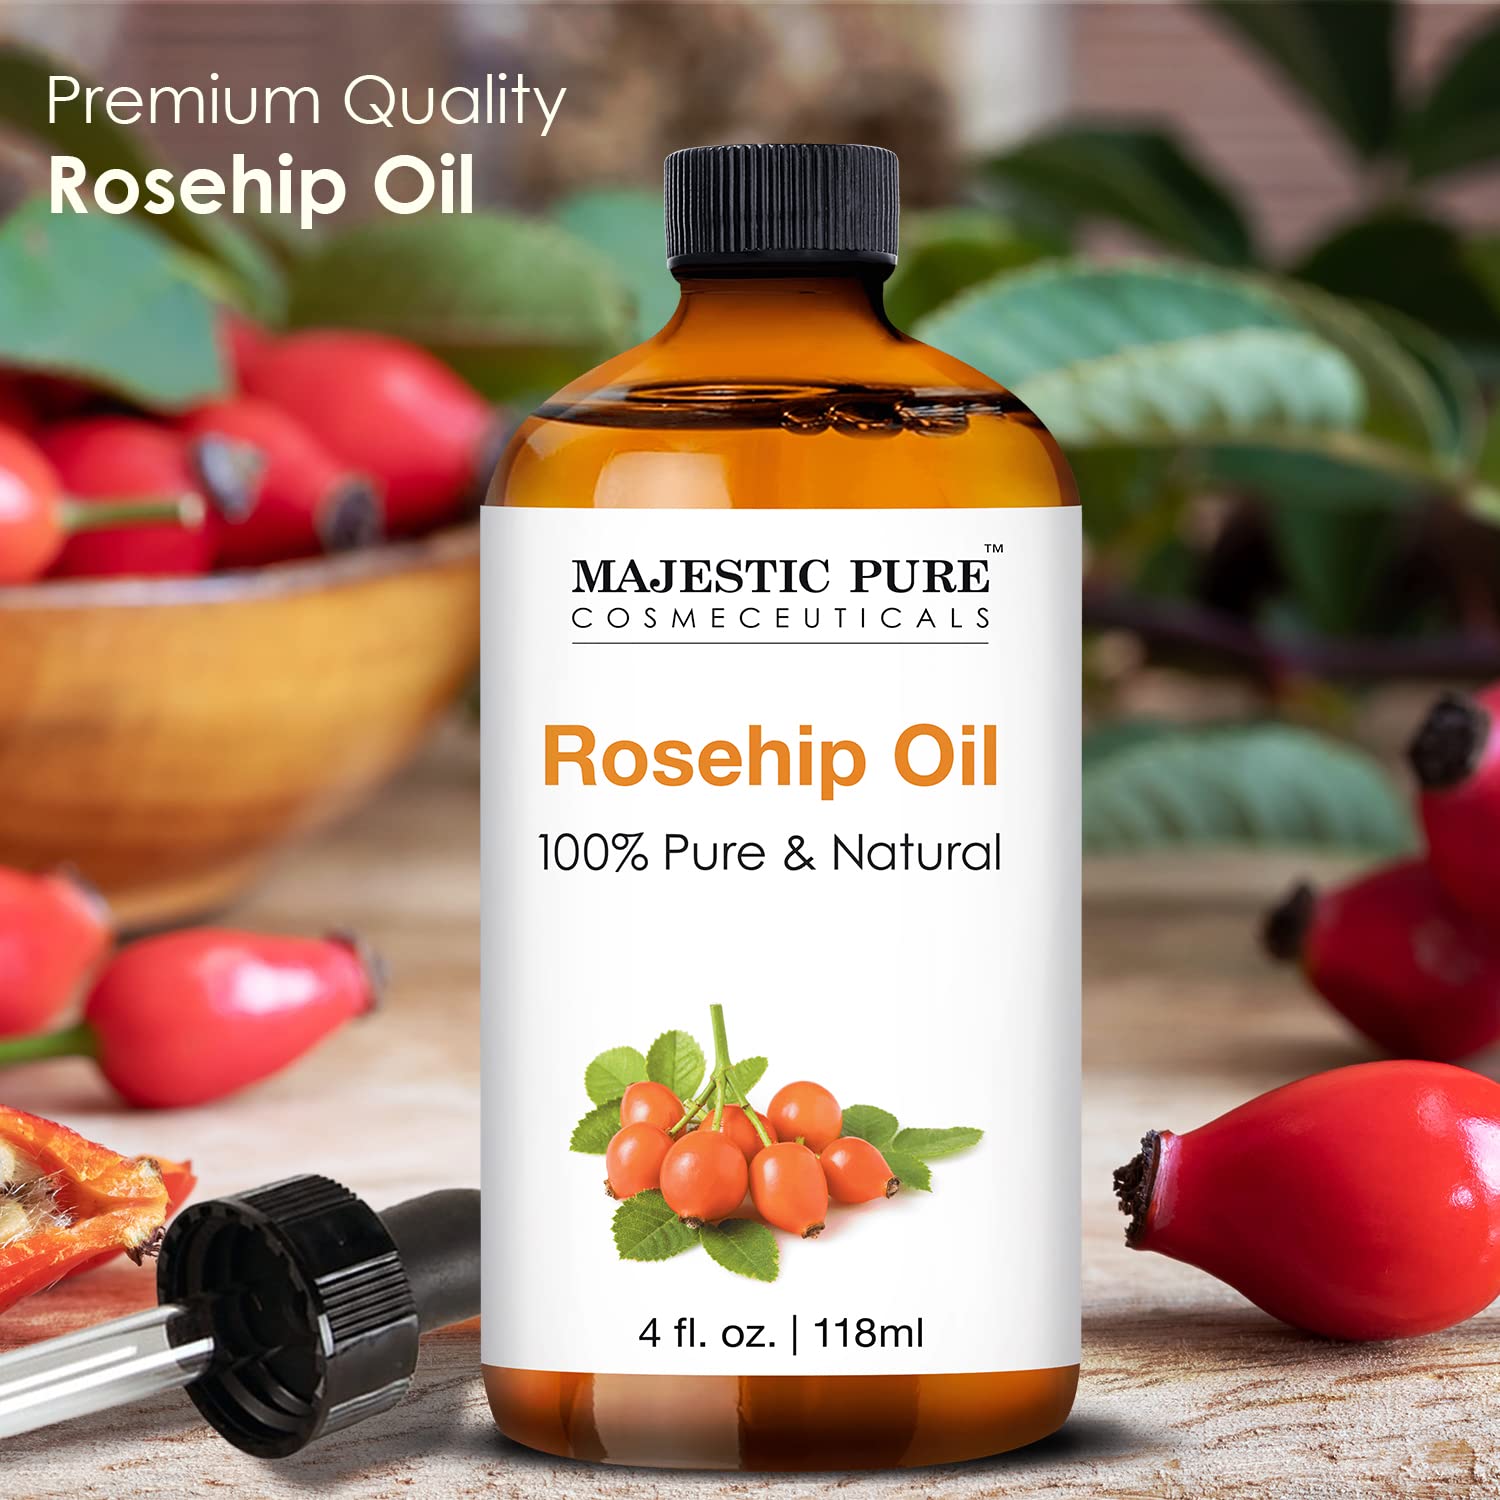 Majestic Pure Rosehip Oil, 4 fl oz - image 2 of 5